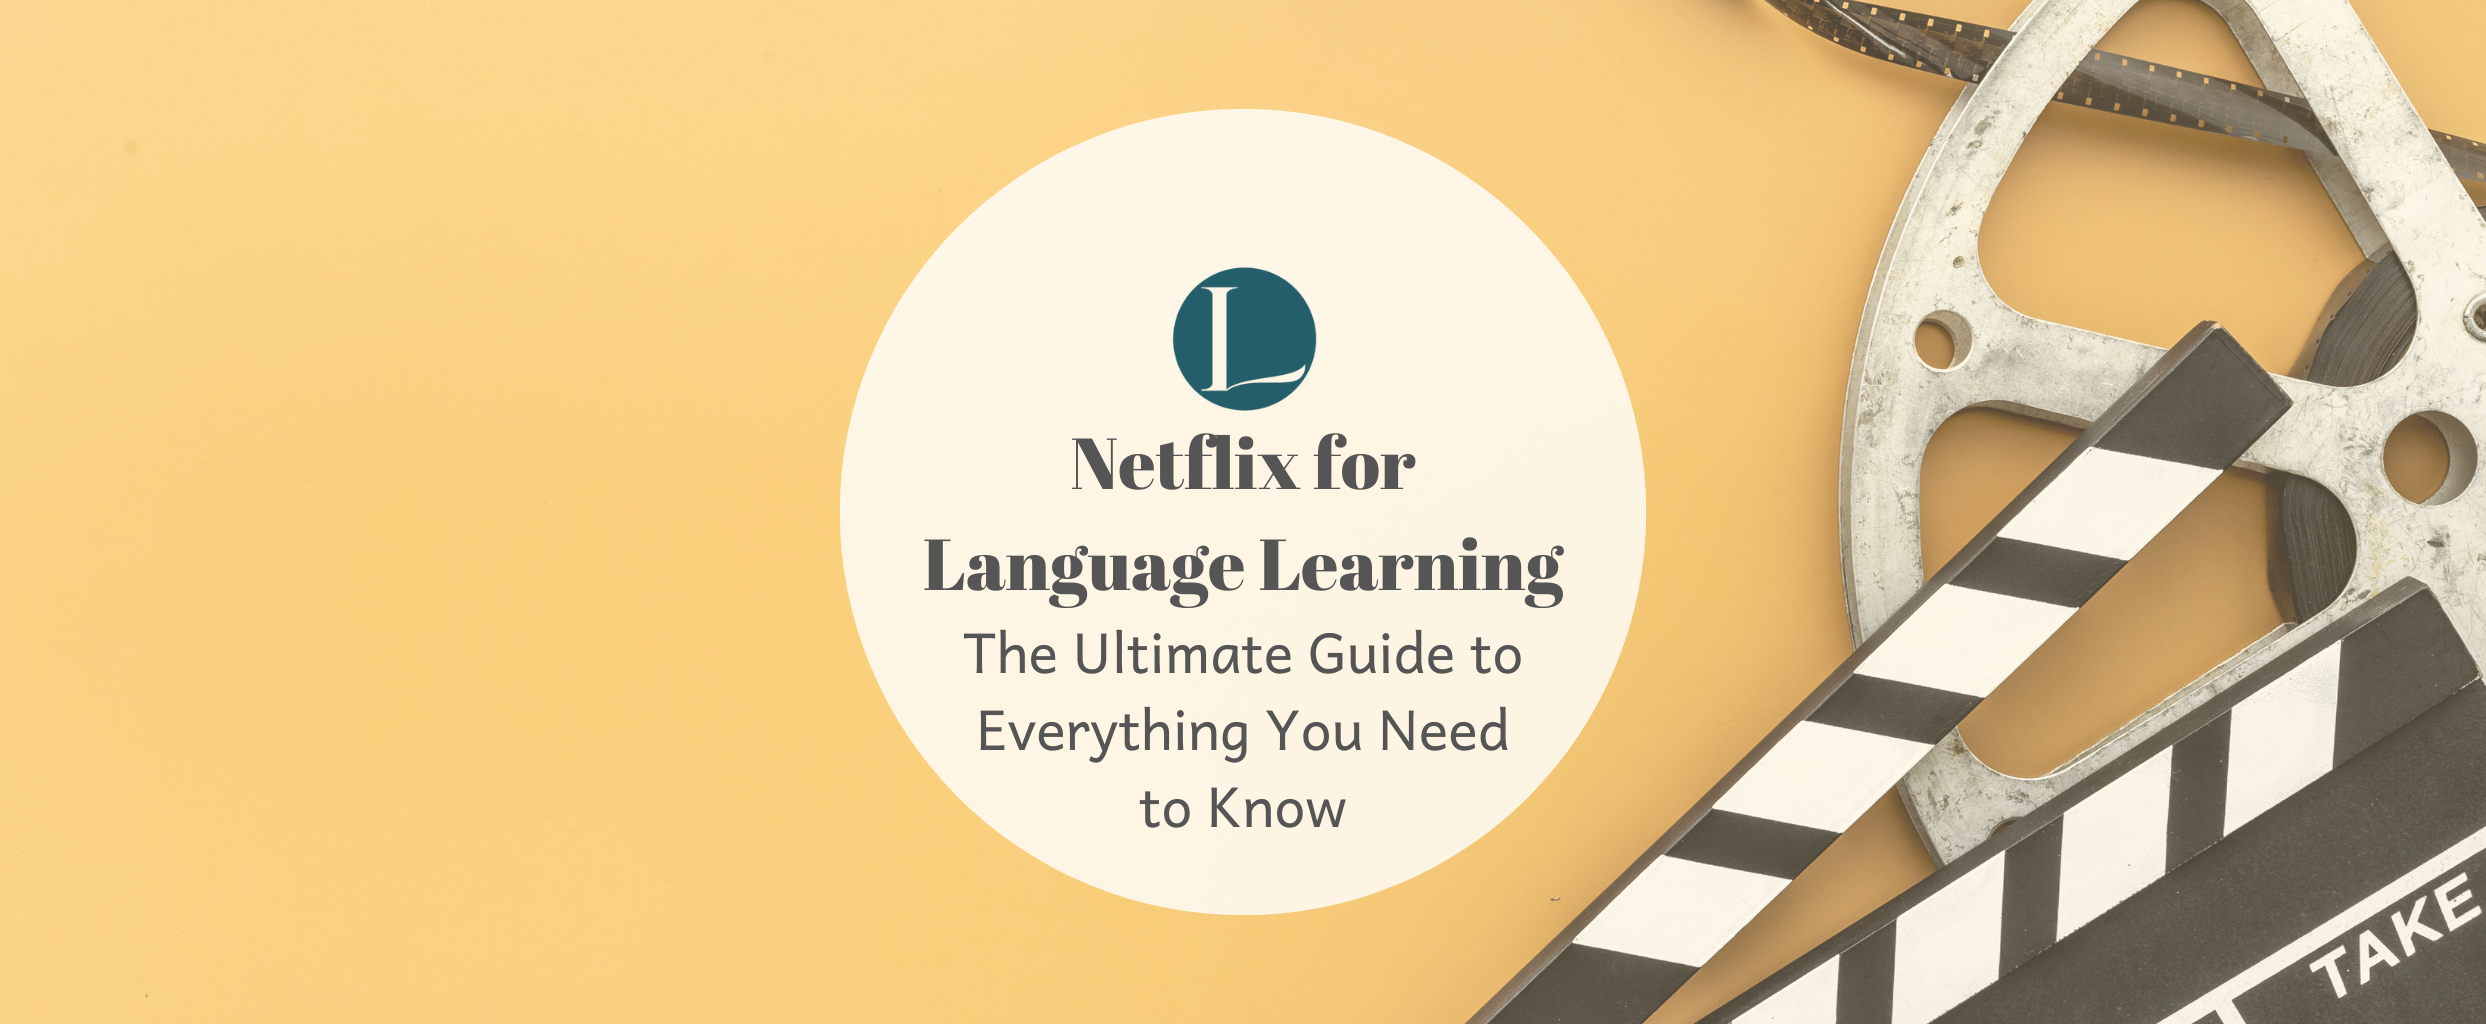 safari extension netflix language learning